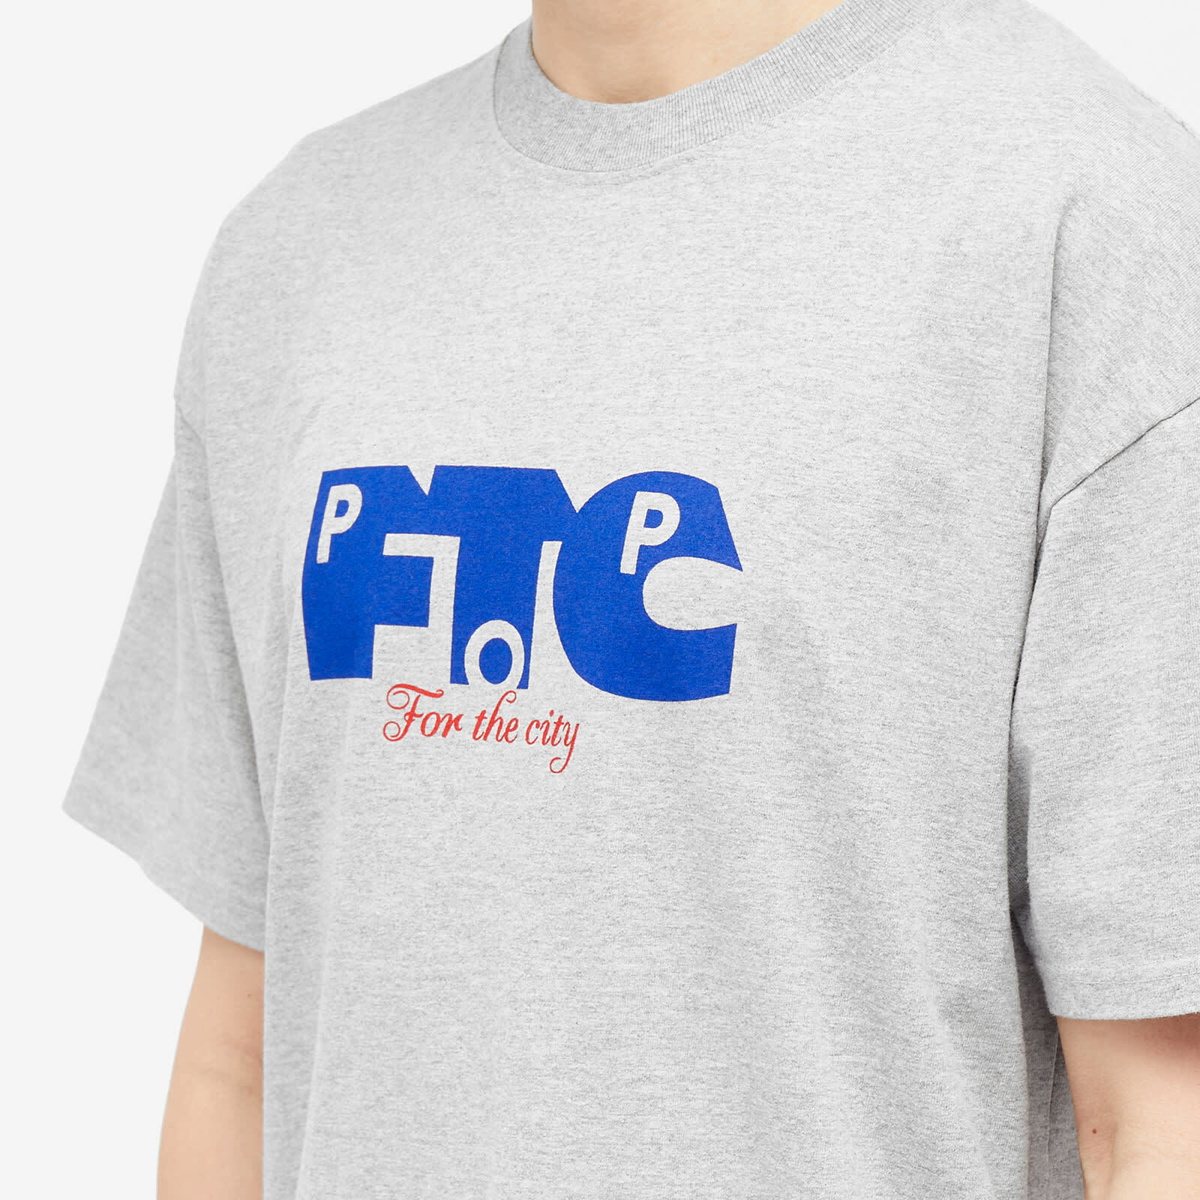 FTC Knit shirt